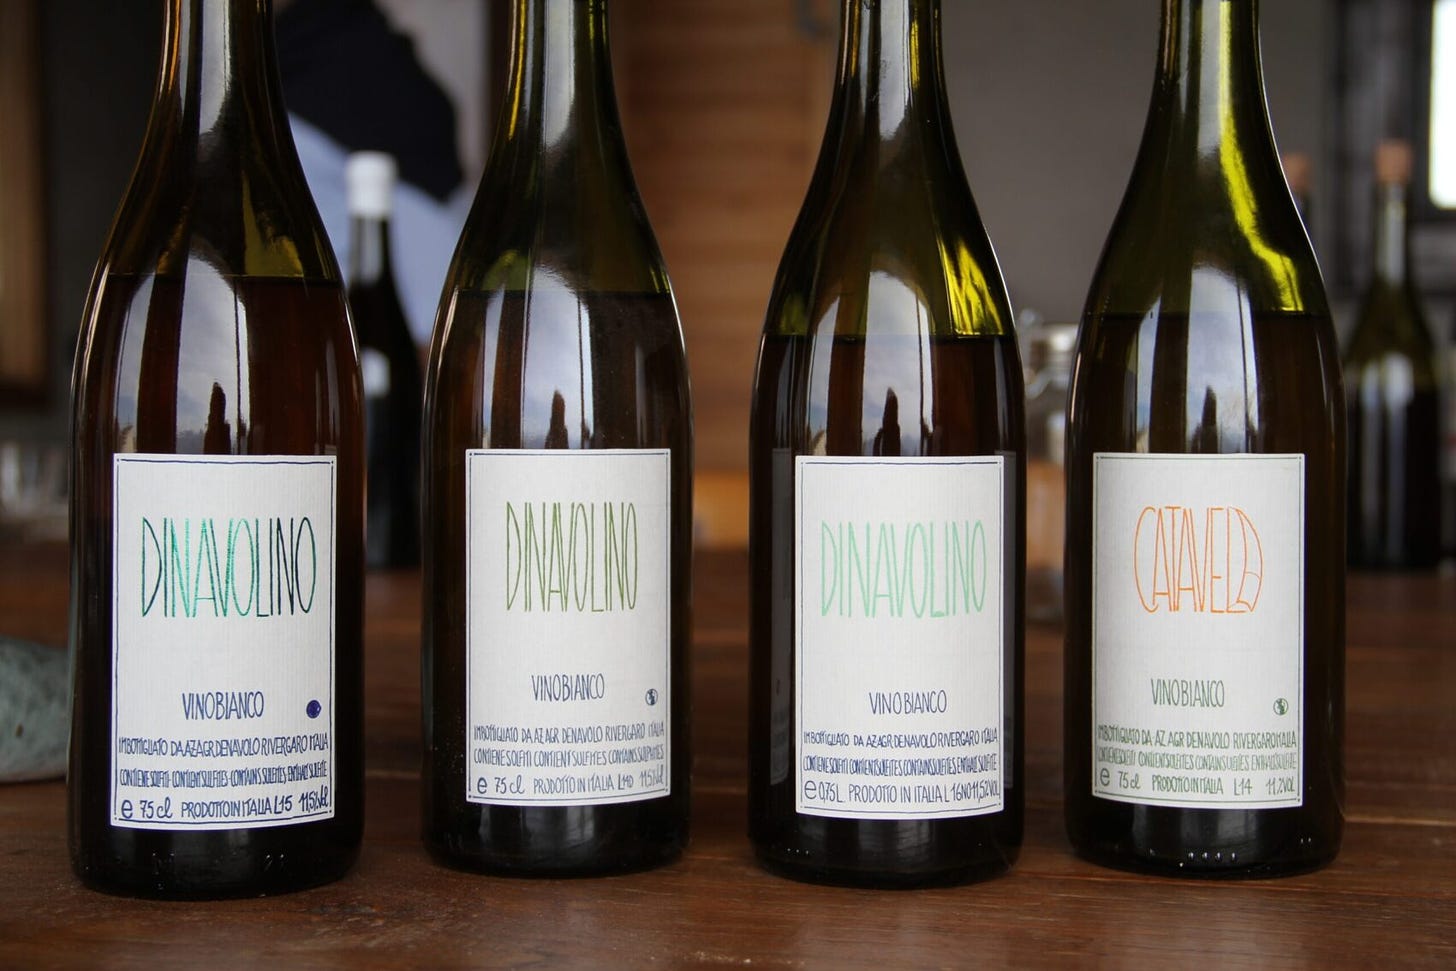 Bottles of Denavolo - Dinavolino. Photo (C) Simon J Woolf.